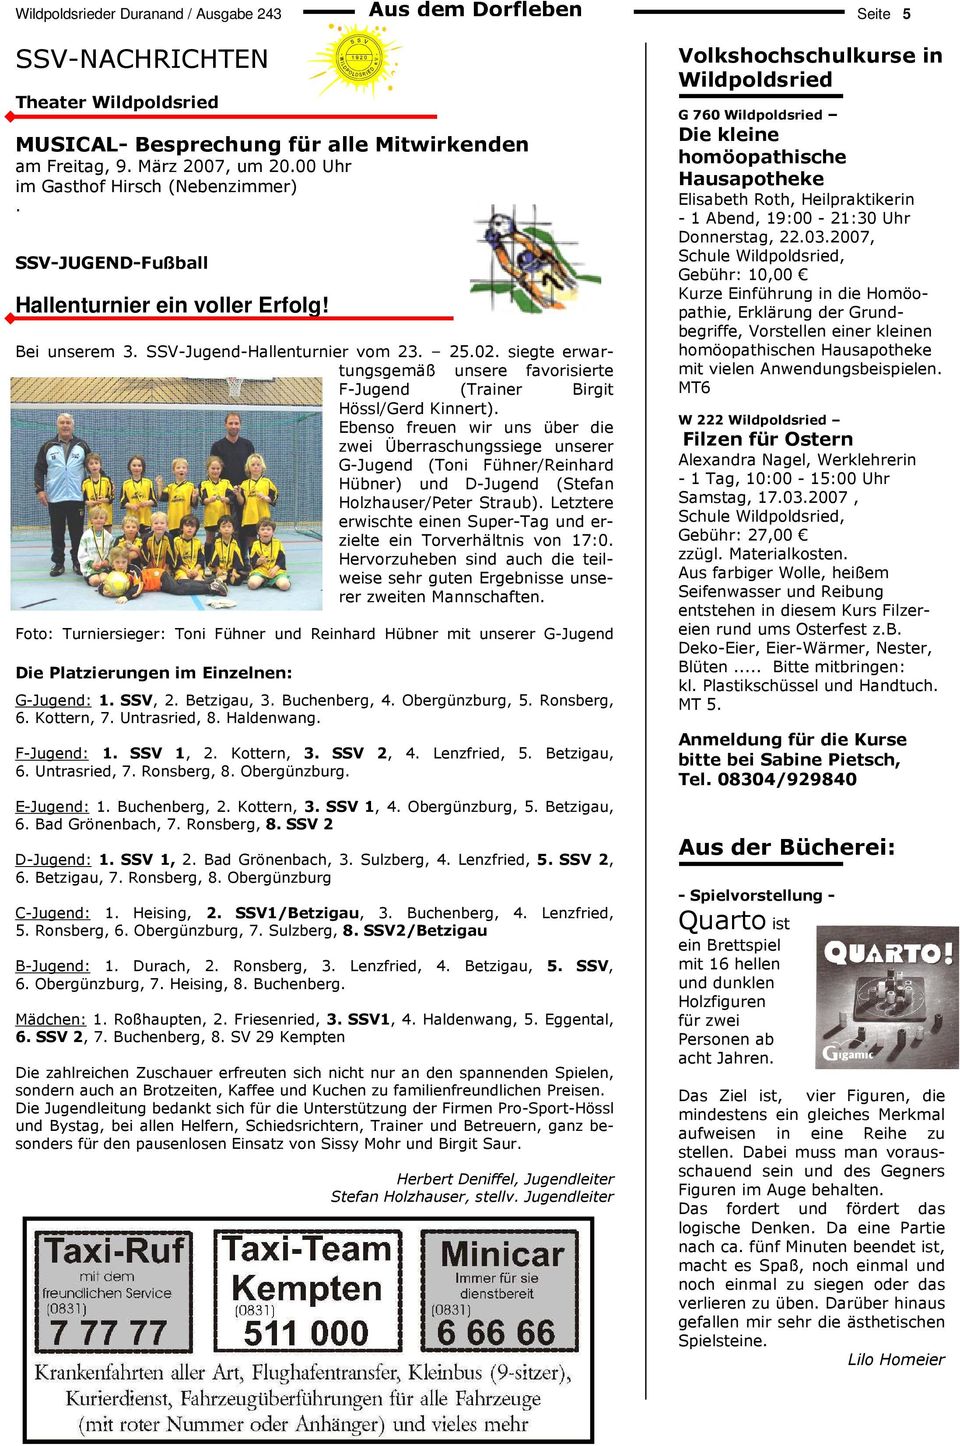 siegte erwartungsgemäß unsere favorisierte F-Jugend (Trainer Birgit Hössl/Gerd Kinnert).